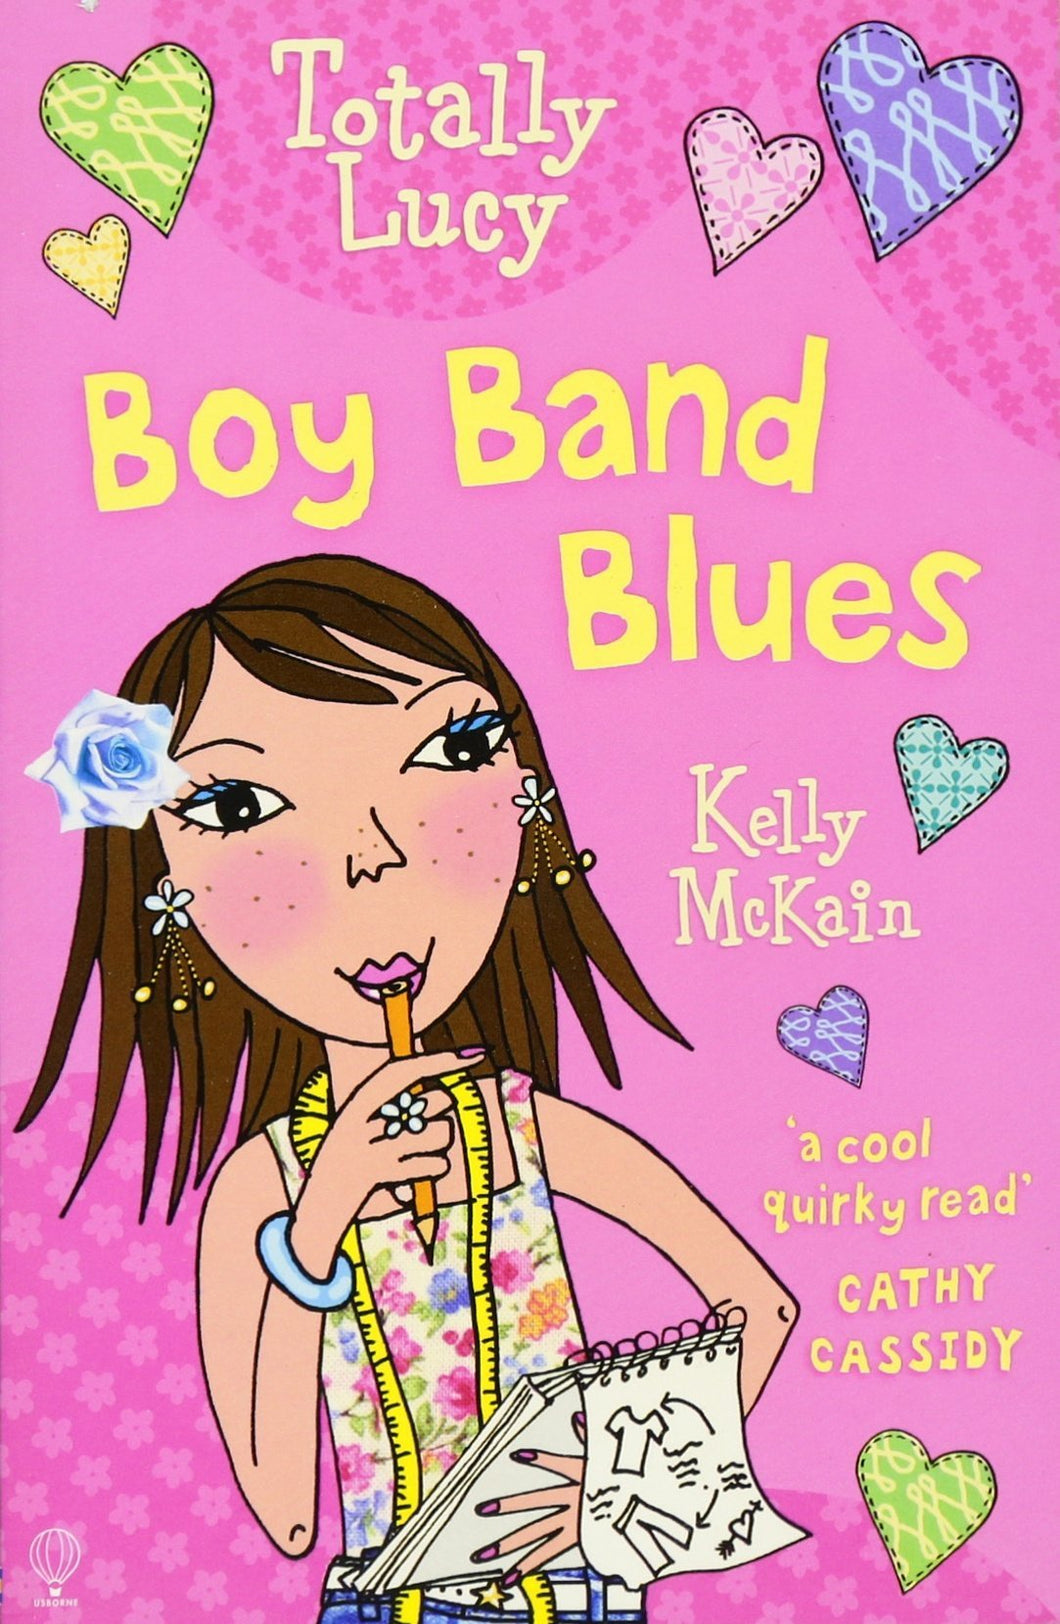 USBORNE TOTALLY LUCY Boy Band Blues - ONLINE SCHOOL BOOK FAIRS 